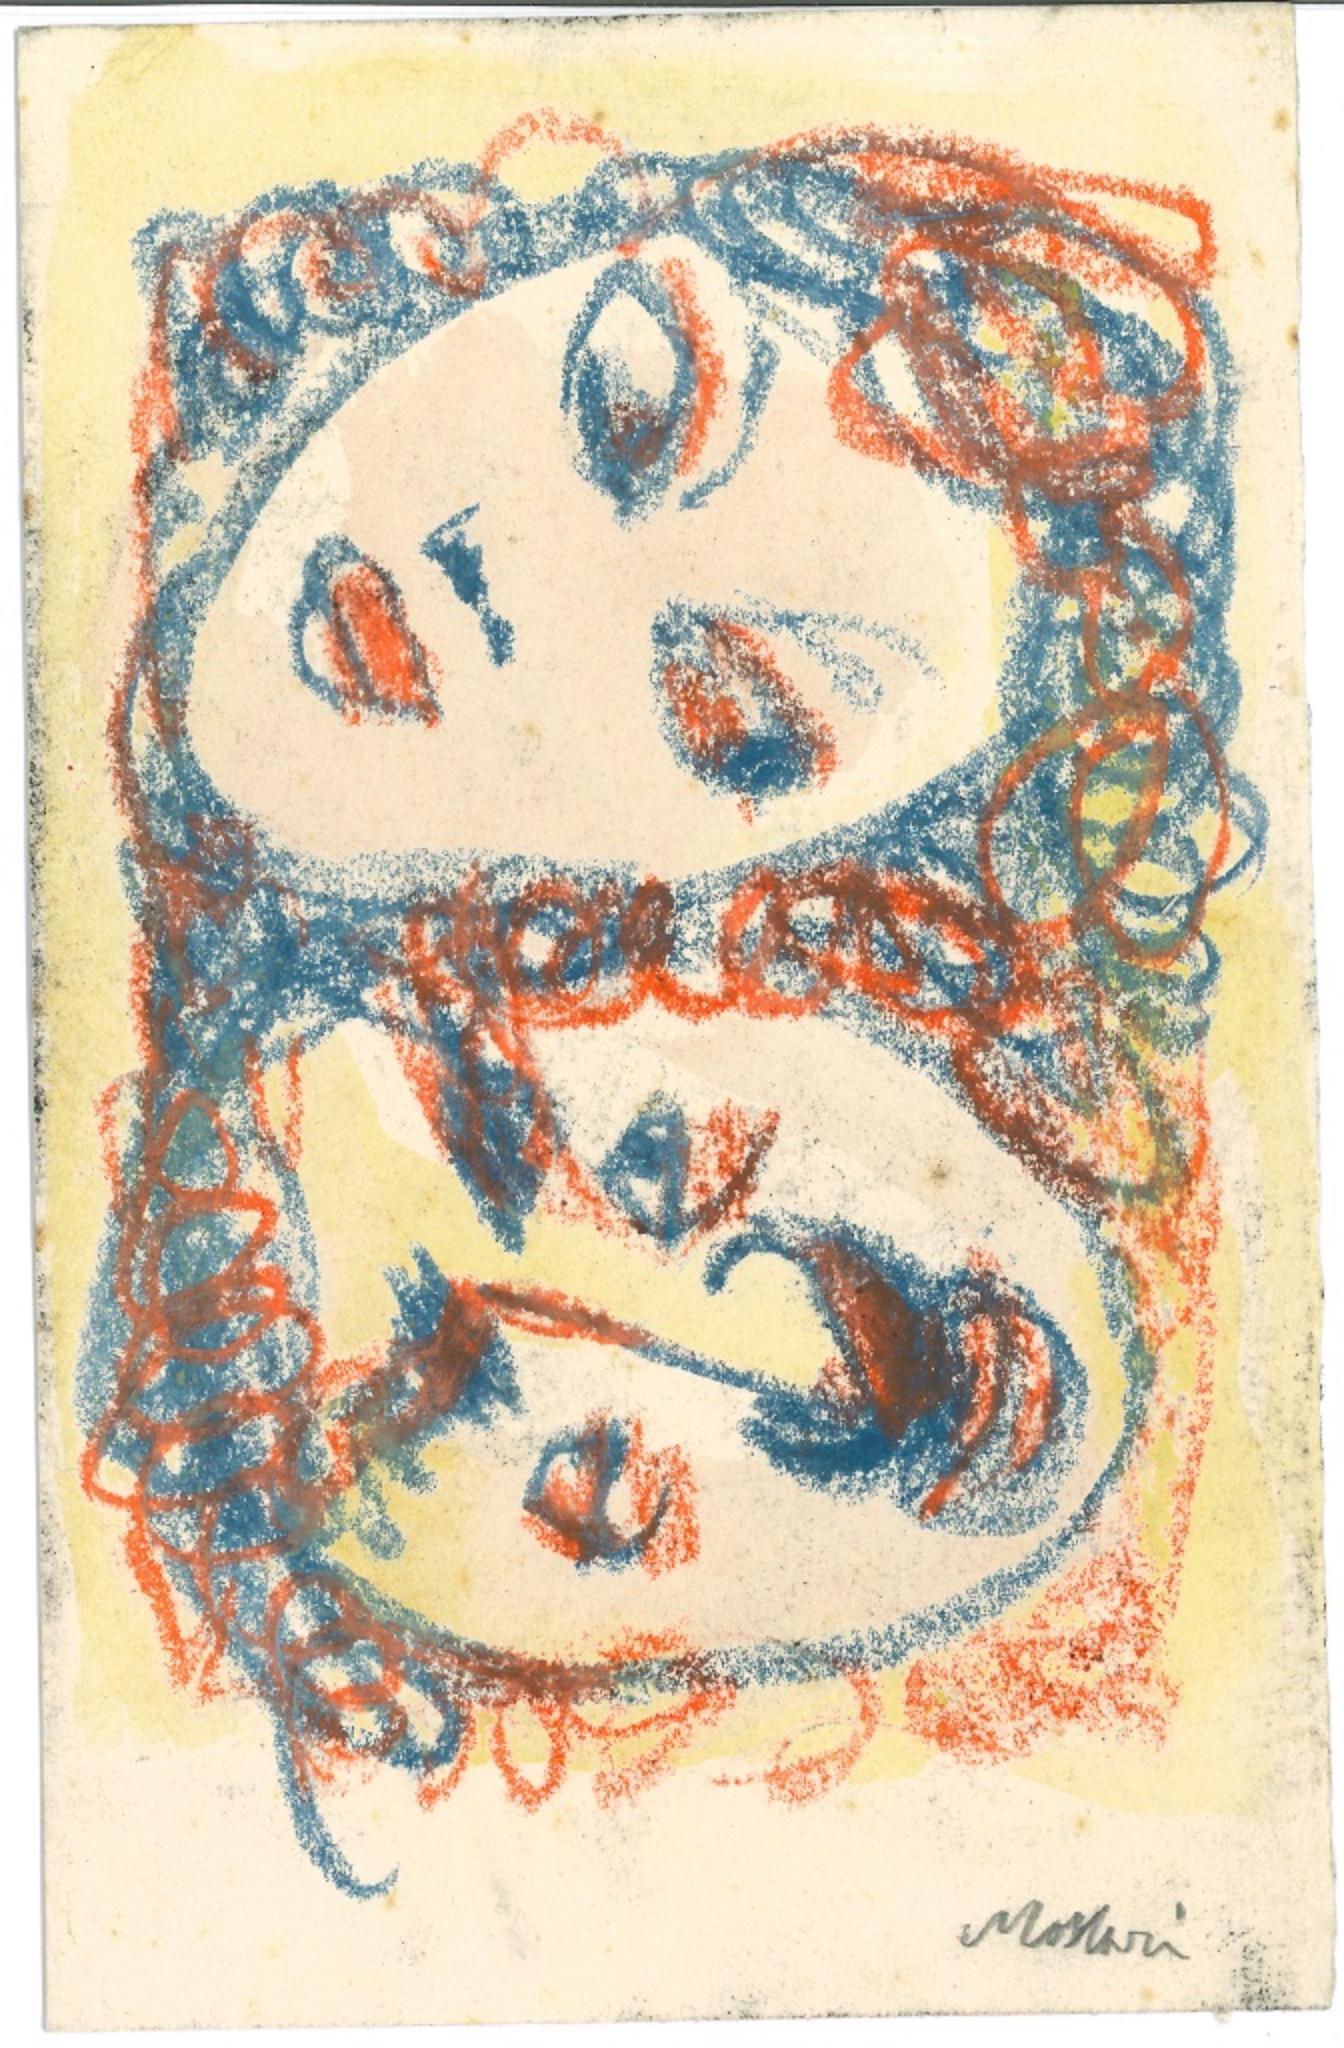 Man and Woman - Pastel Drawing by Mino Maccari - 1960s